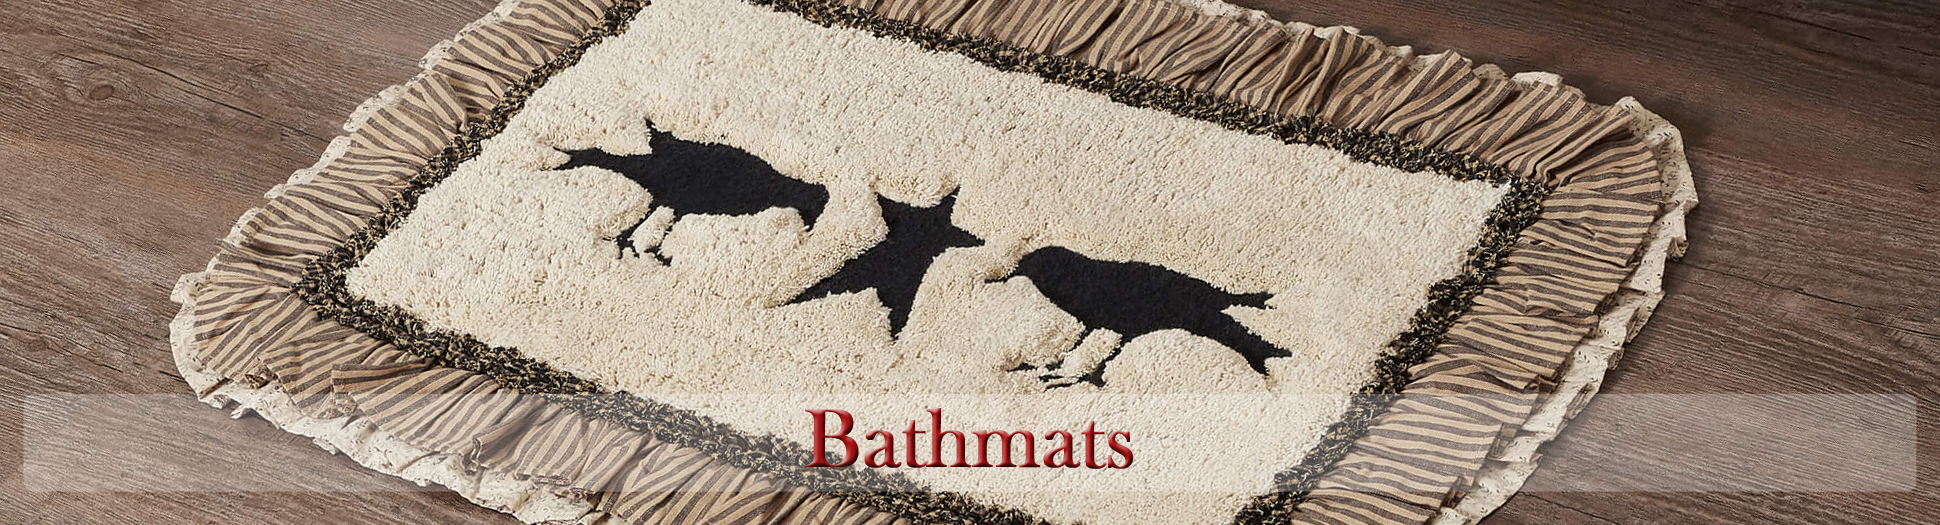 Bathmats by VHC Brands